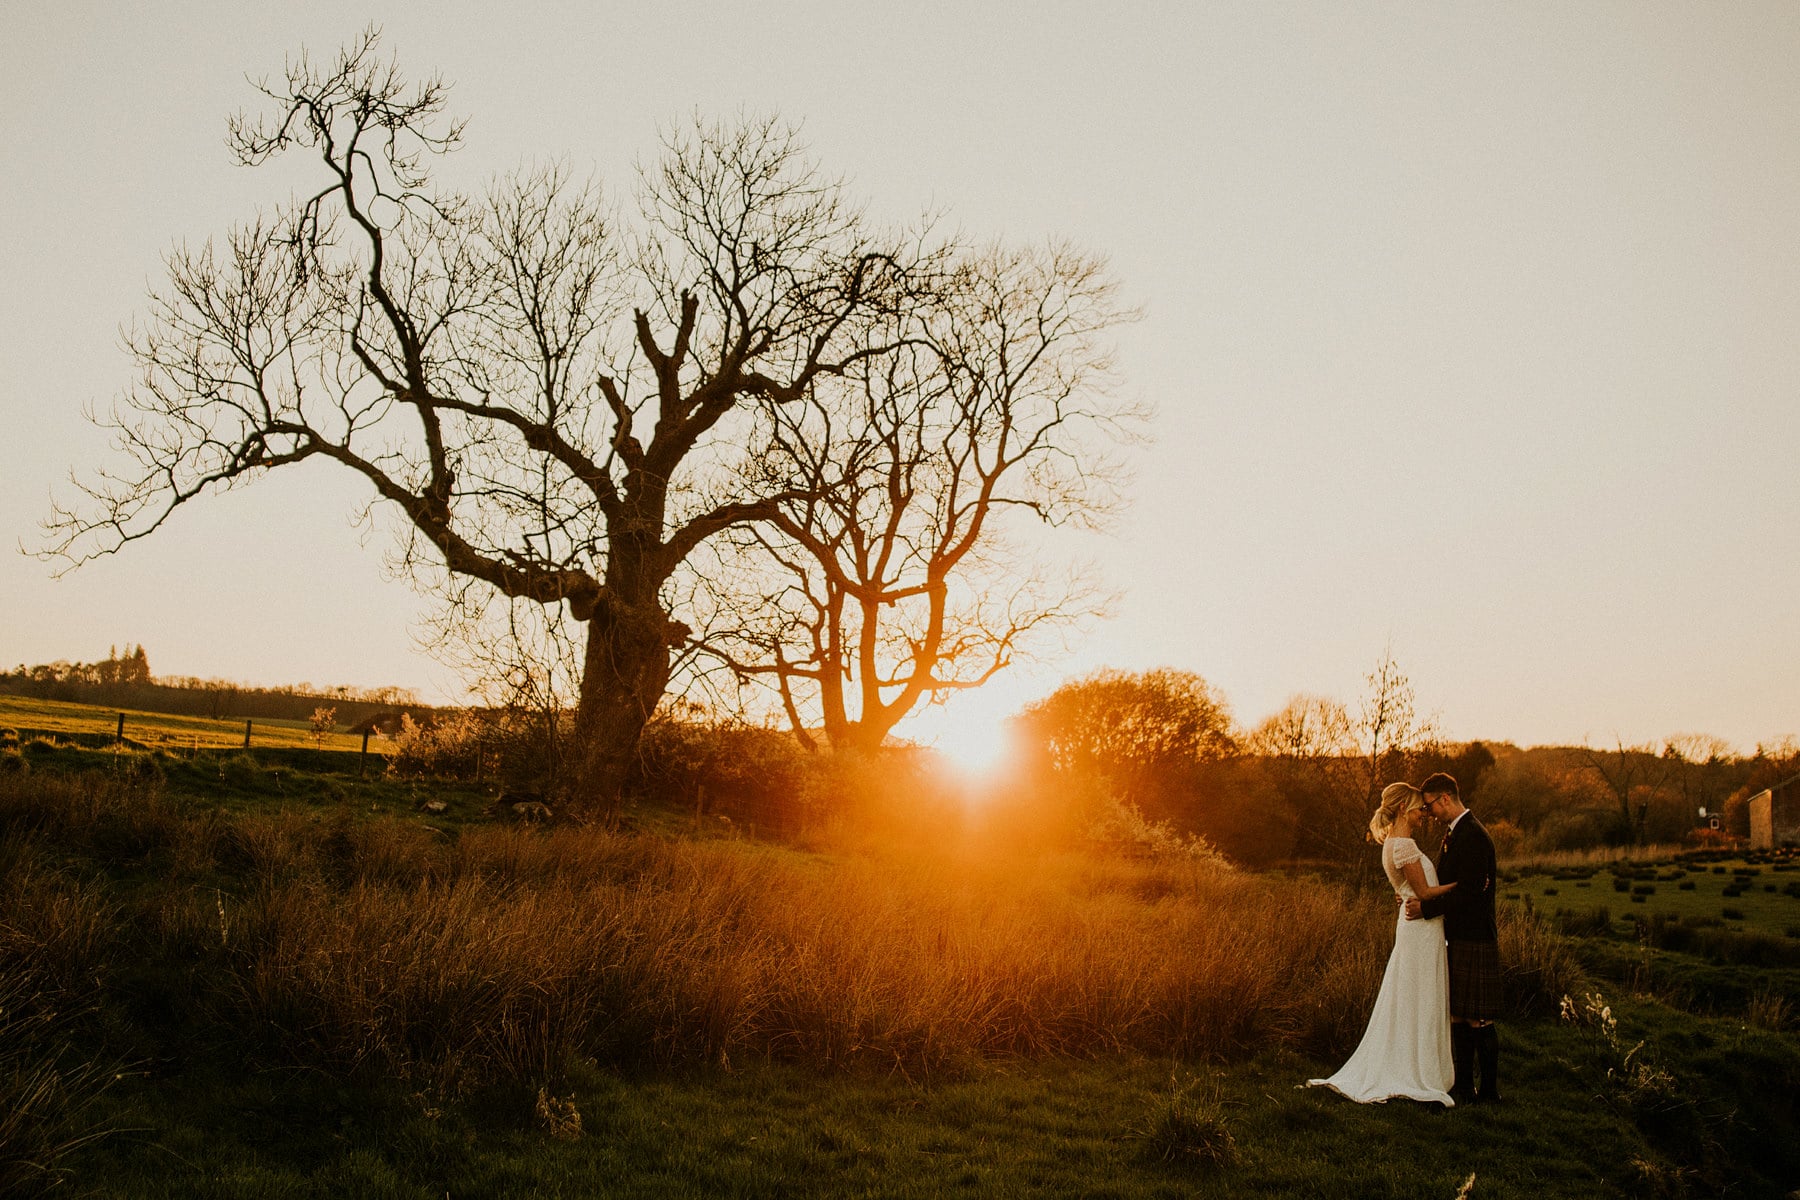 Dalduff Farm sunset wedding images